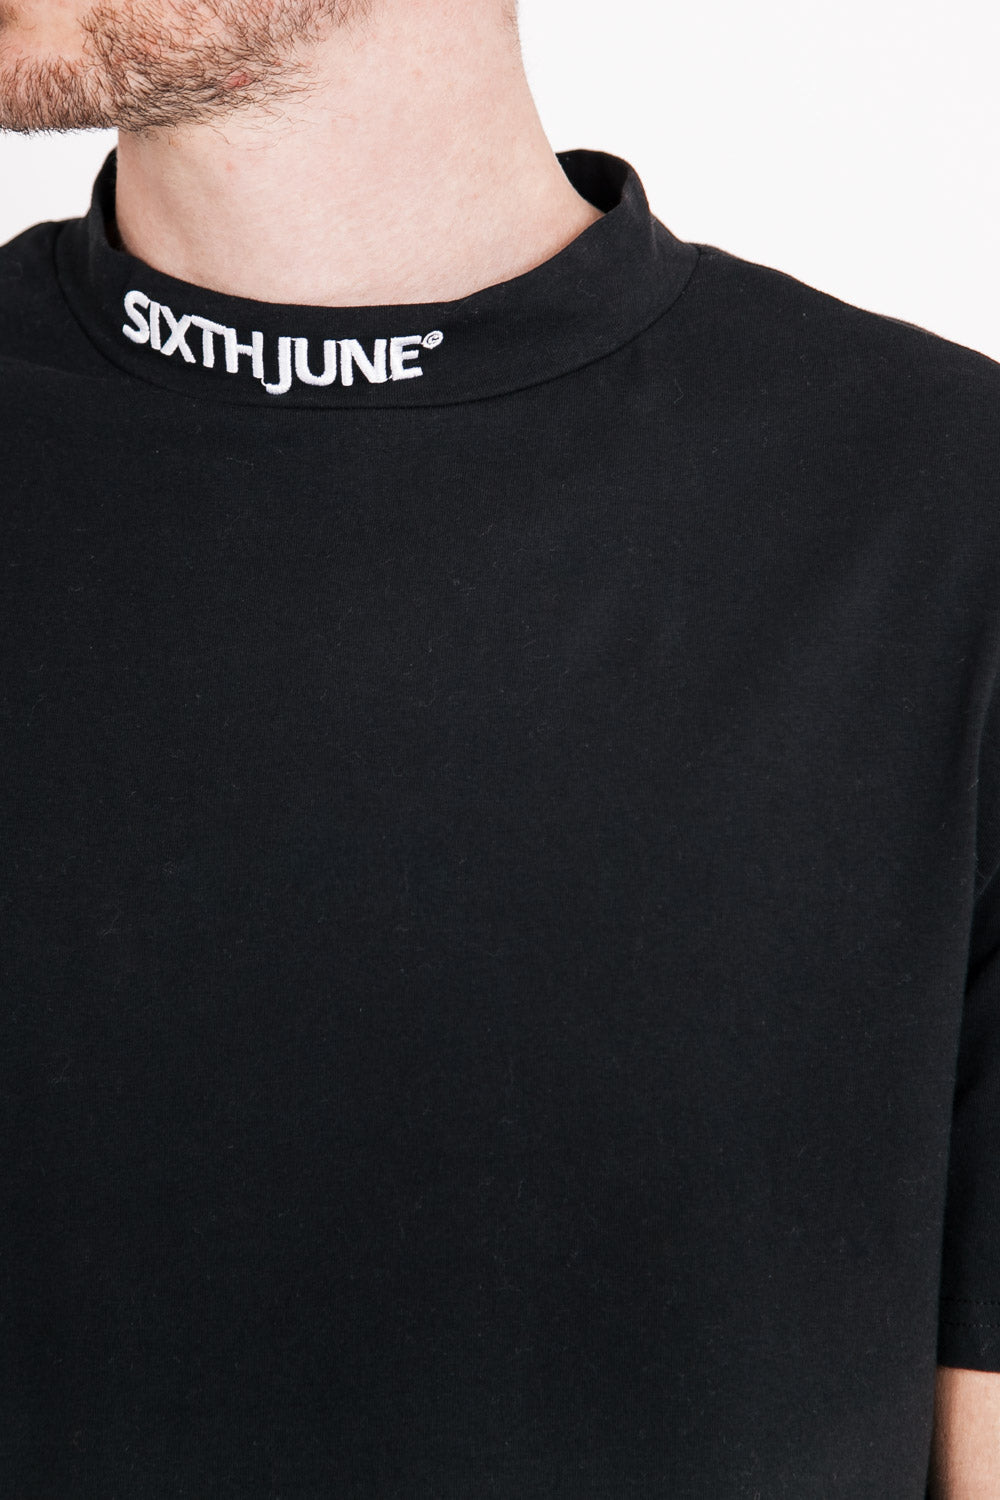 Sixth June - T-shirt logo col noir